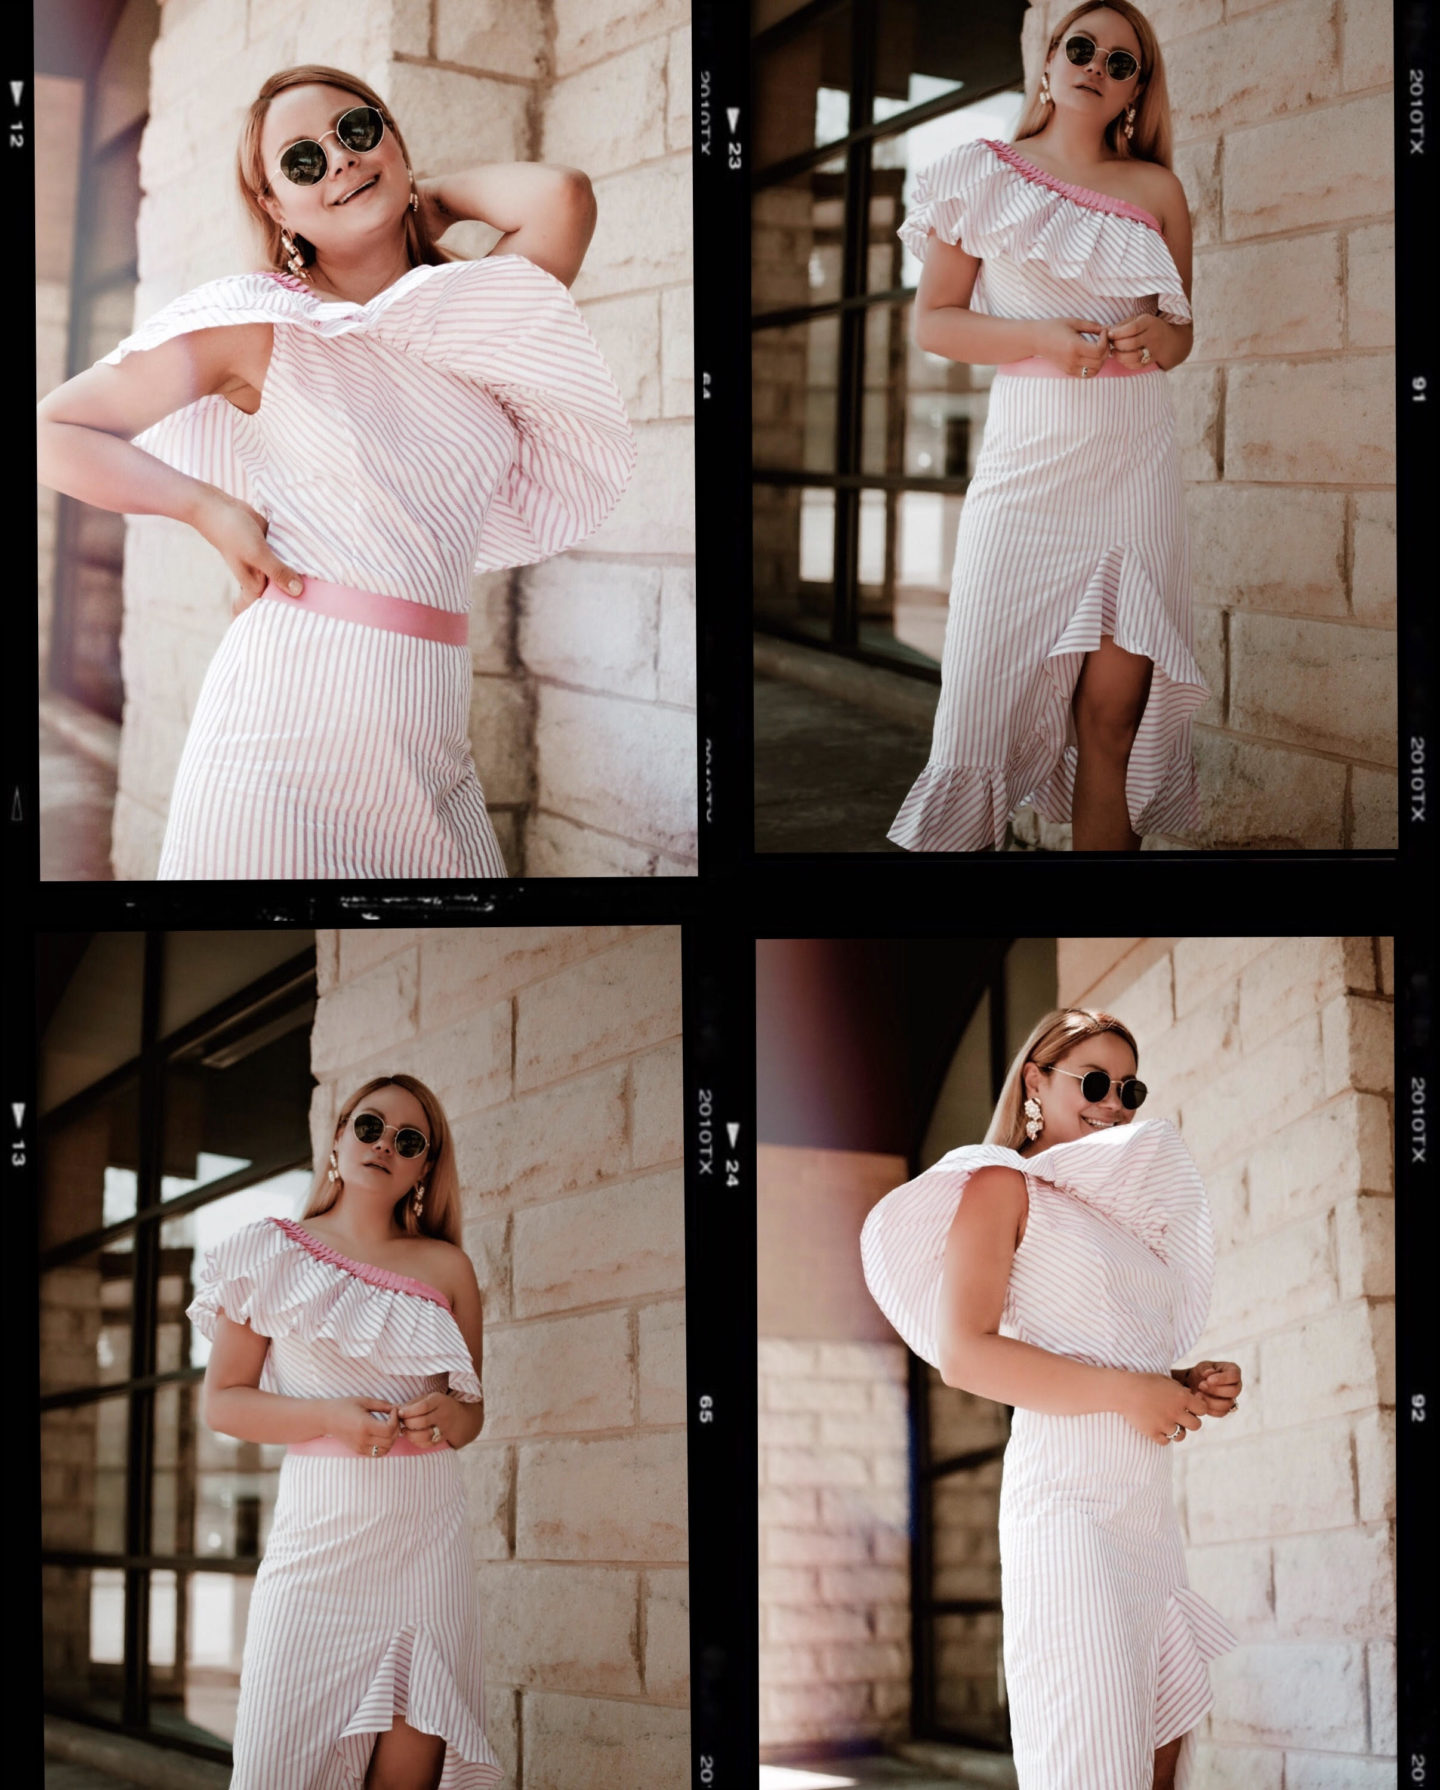 SilkNY-Vanessa-Lambert-Pink-Skirt-Top-Set-Famous-Blogger-What-Would-V-Wear